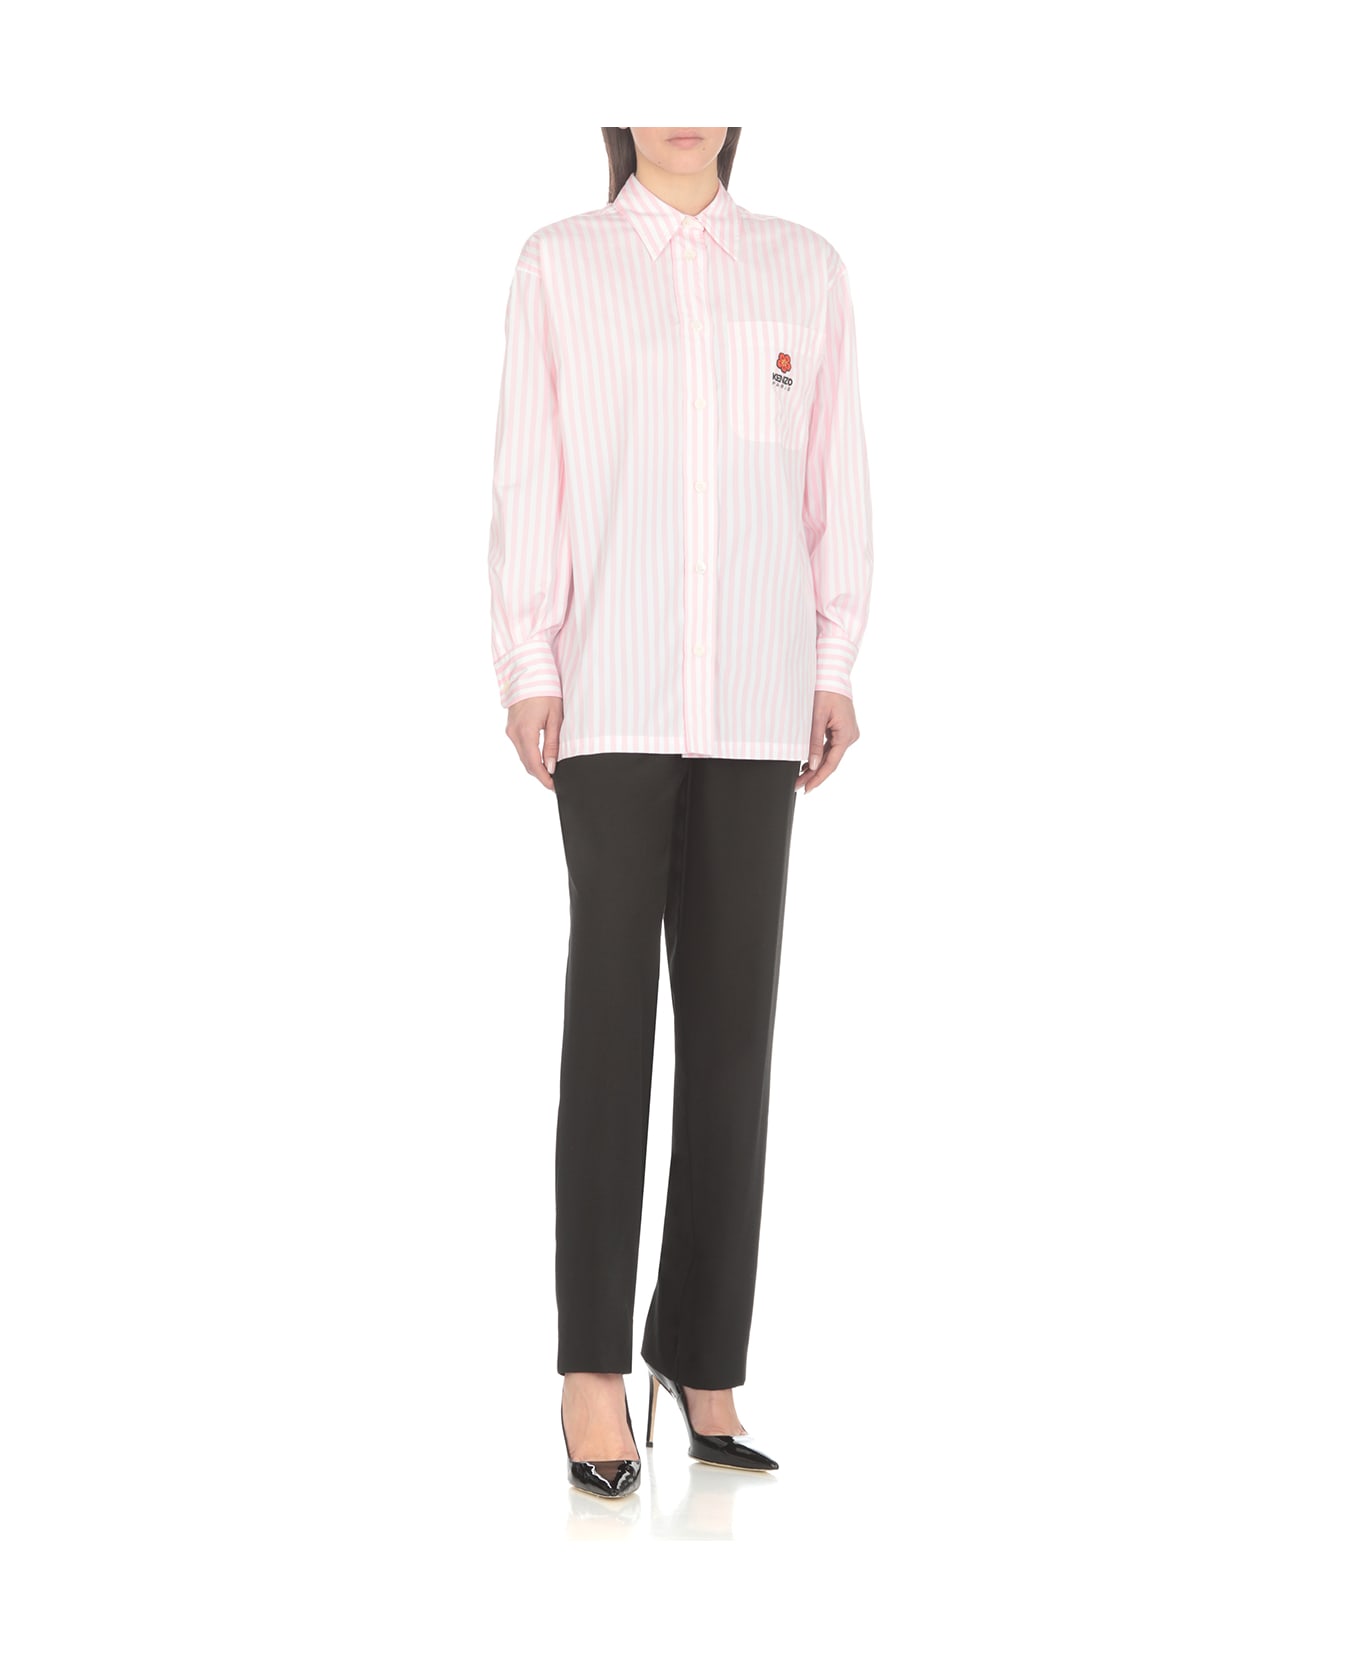 Kenzo Boke 2.0 Shirt - Faded Pink シャツ